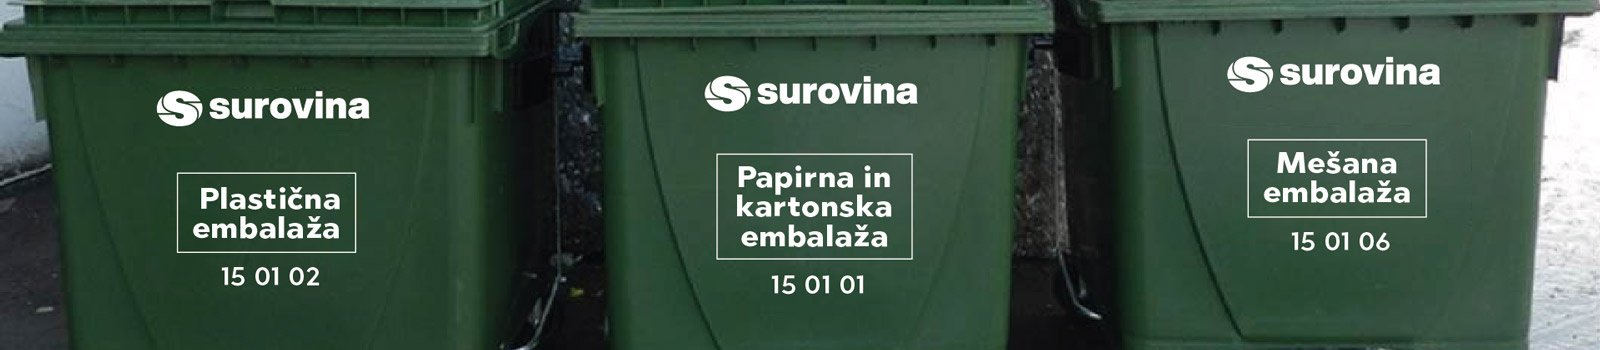 The Surovina packaging scheme